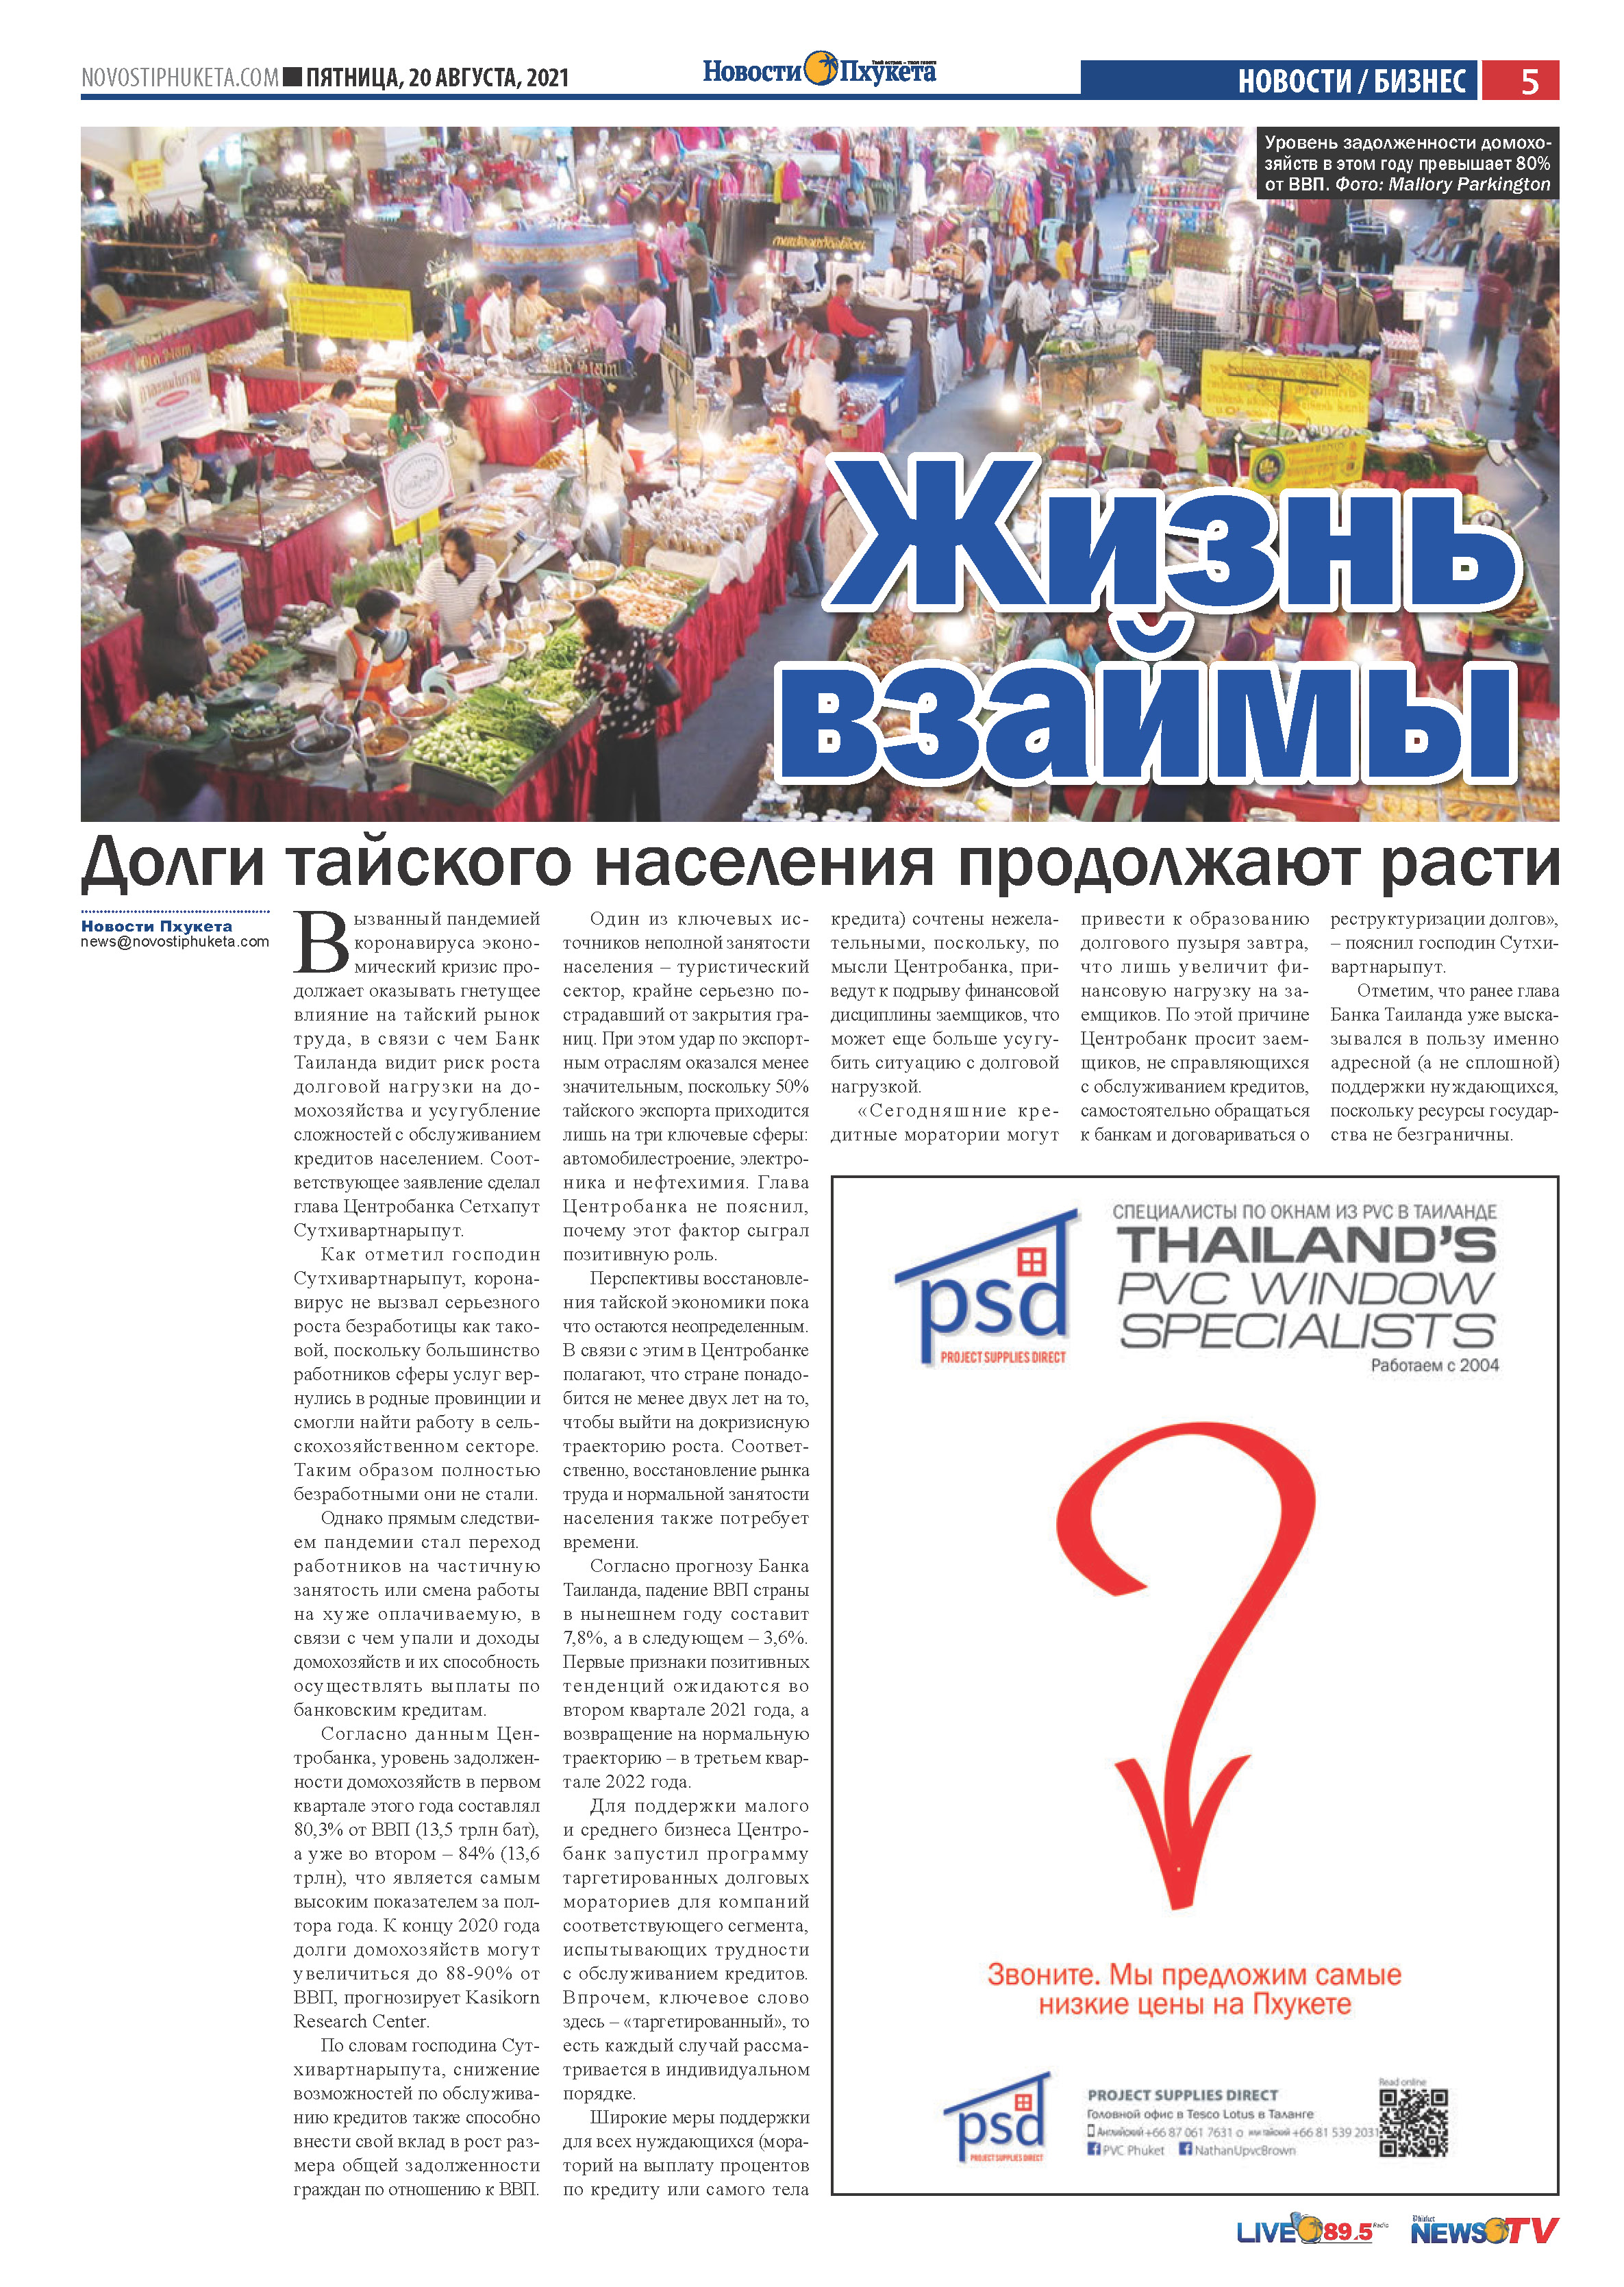 Phuket Newspaper - https://www.novostiphuketa.com/archive/20-08-2021/20-08-2021_Page_05.jpg